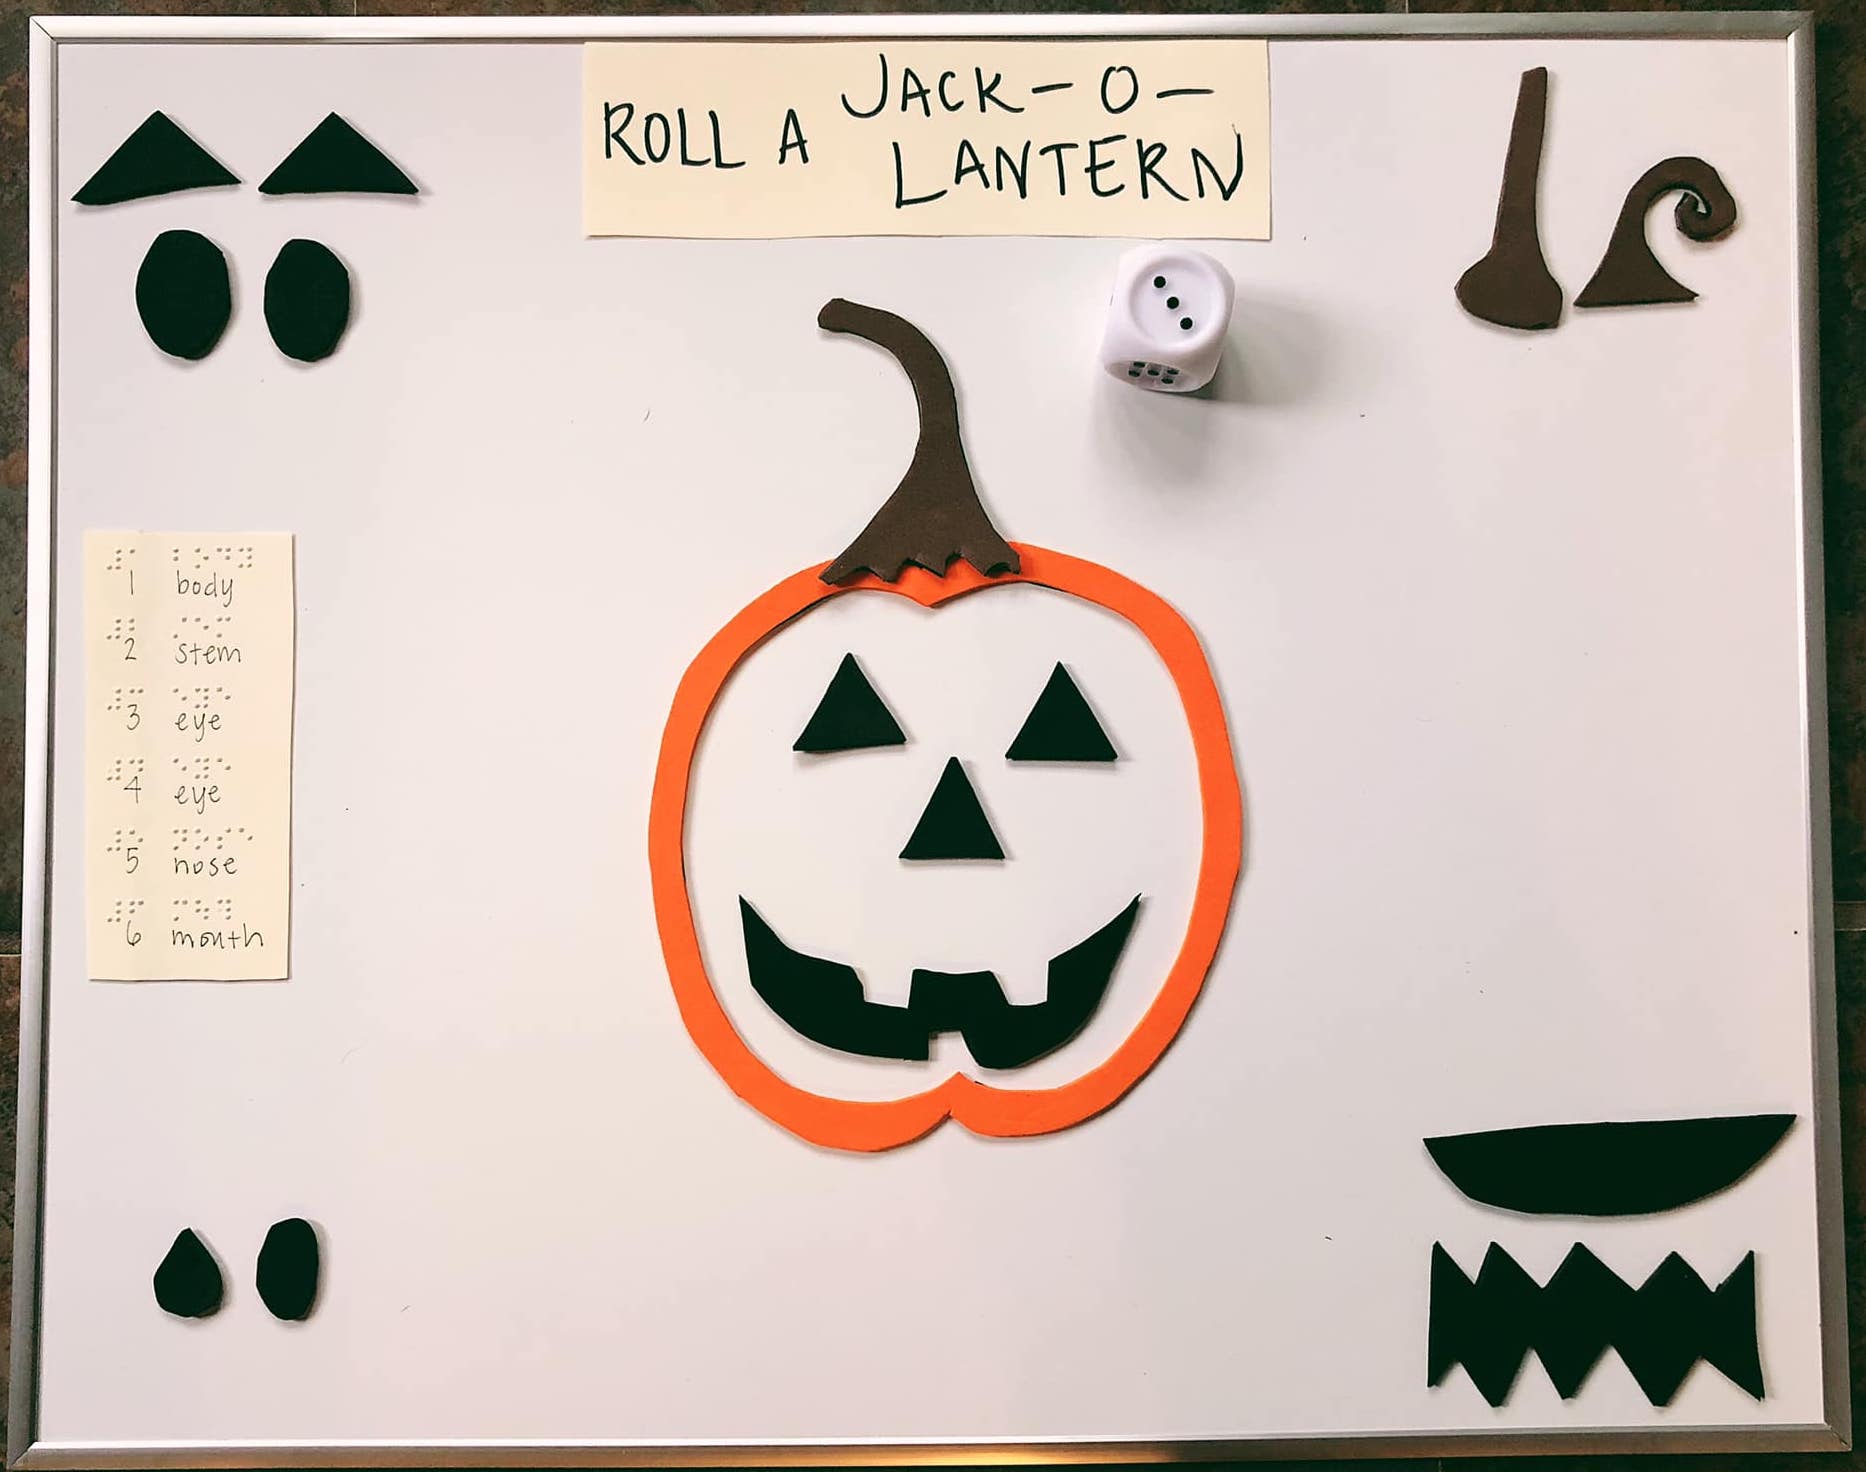 Roll-a-Jack-o-Lantern game